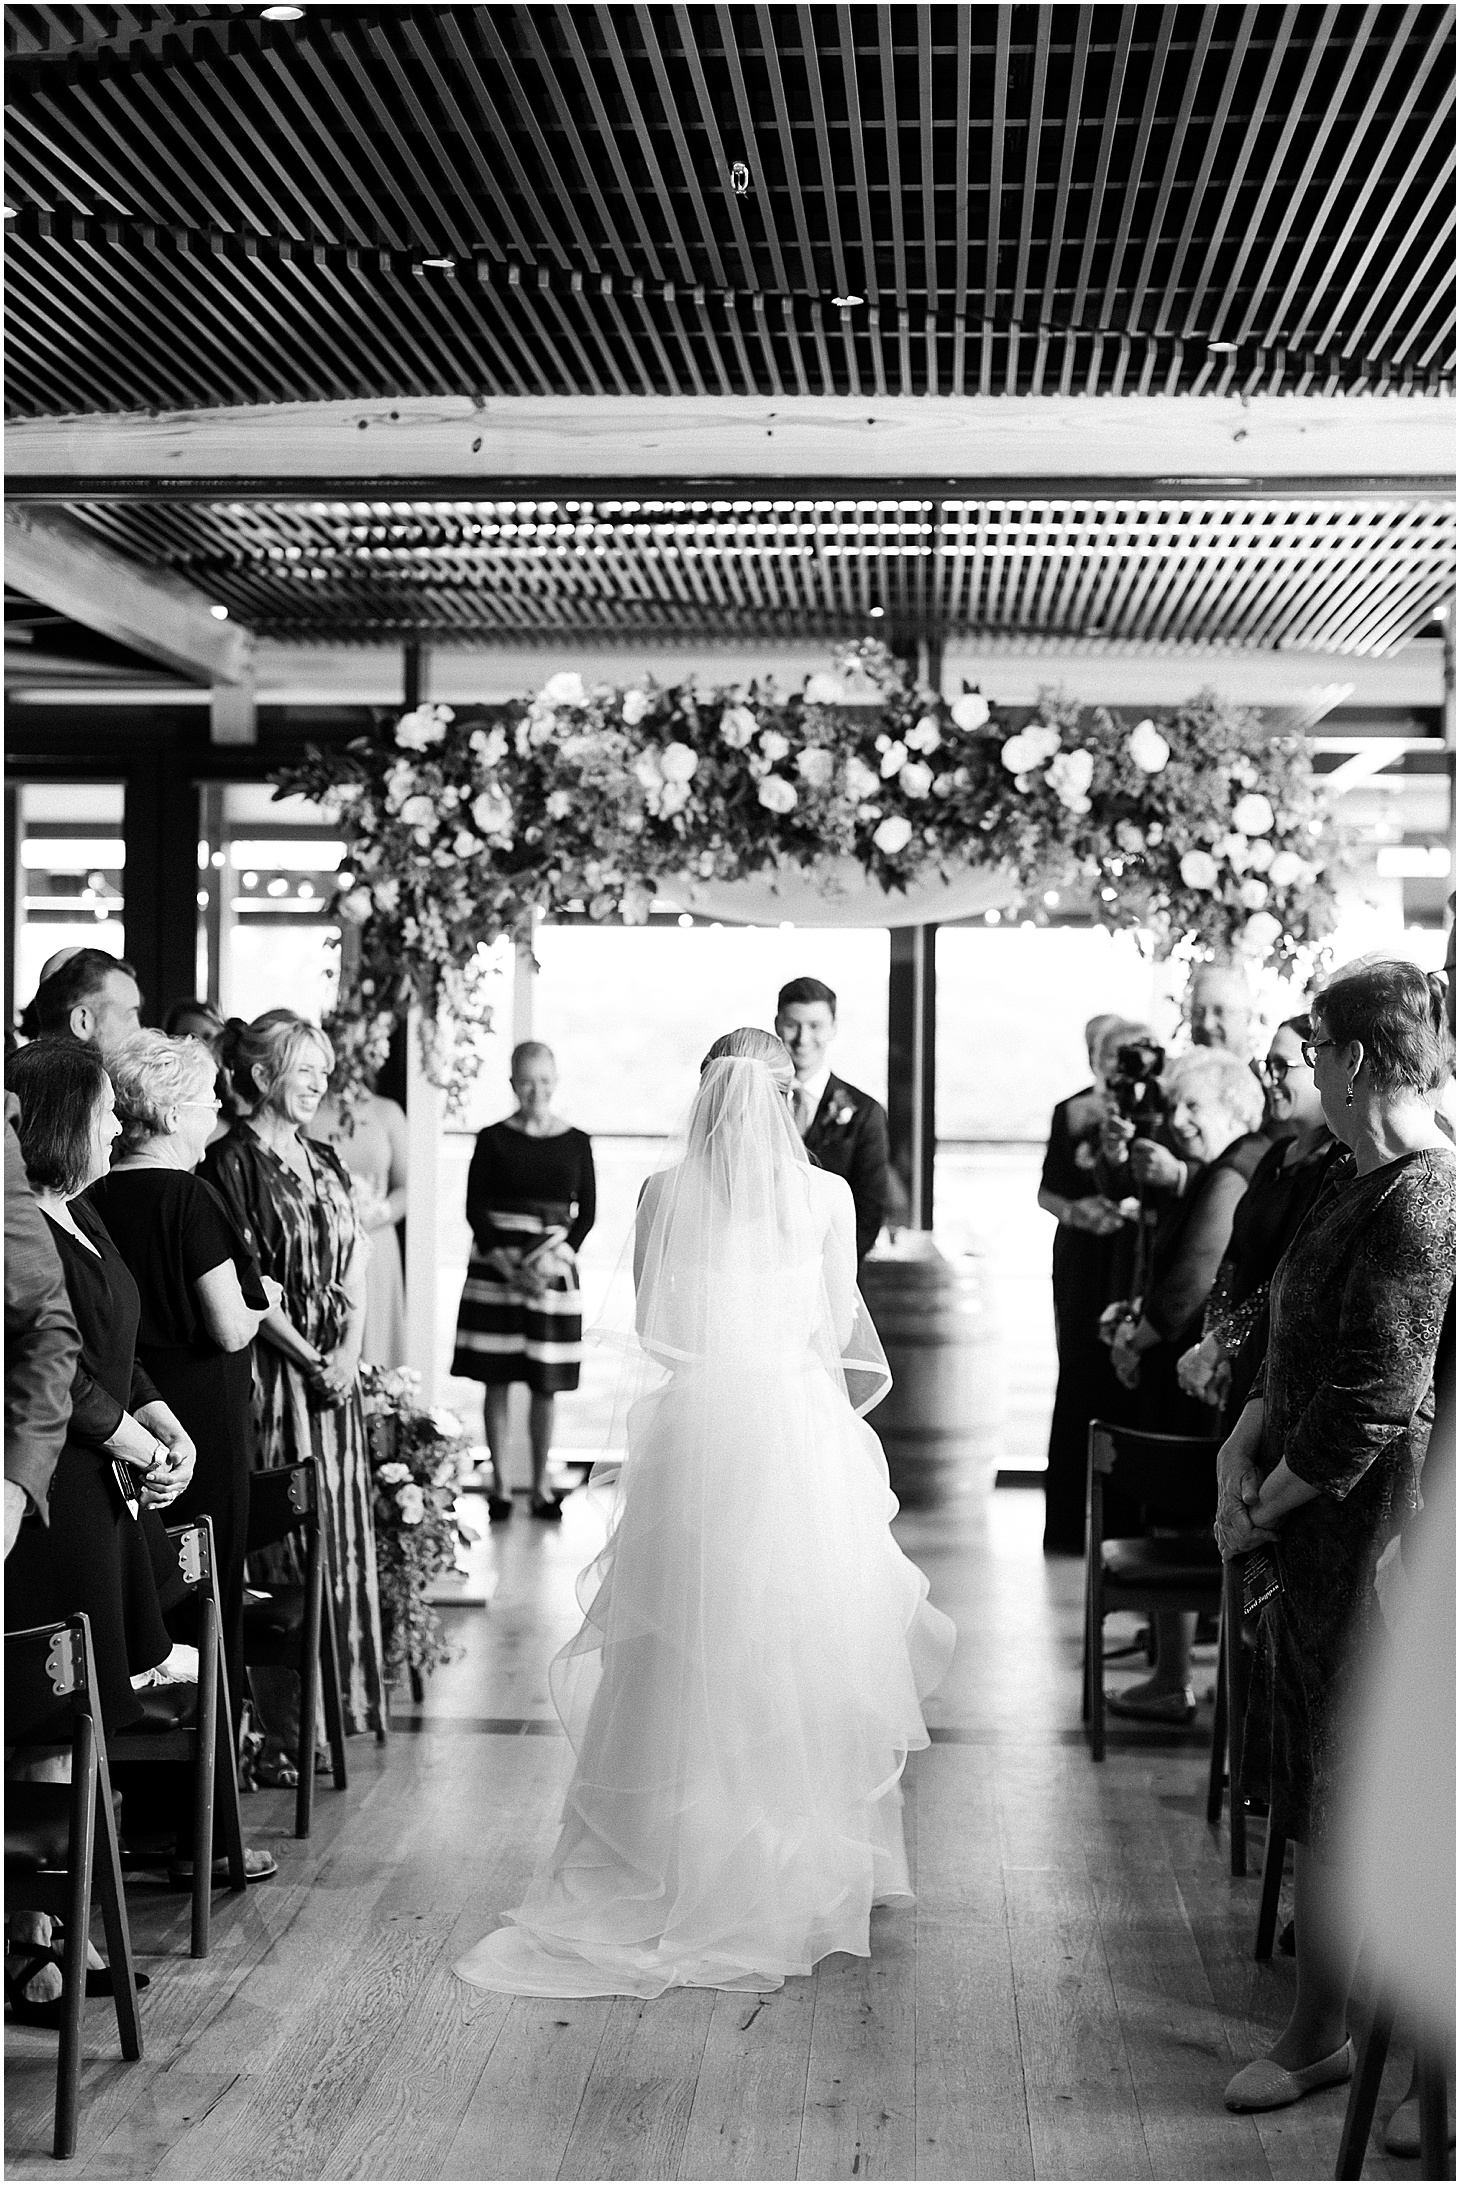 Jewish Wedding Ceremony, Modern Textural Spring Wedding at District Winery, Sarah Bradshaw Photography, DC Wedding Photographer